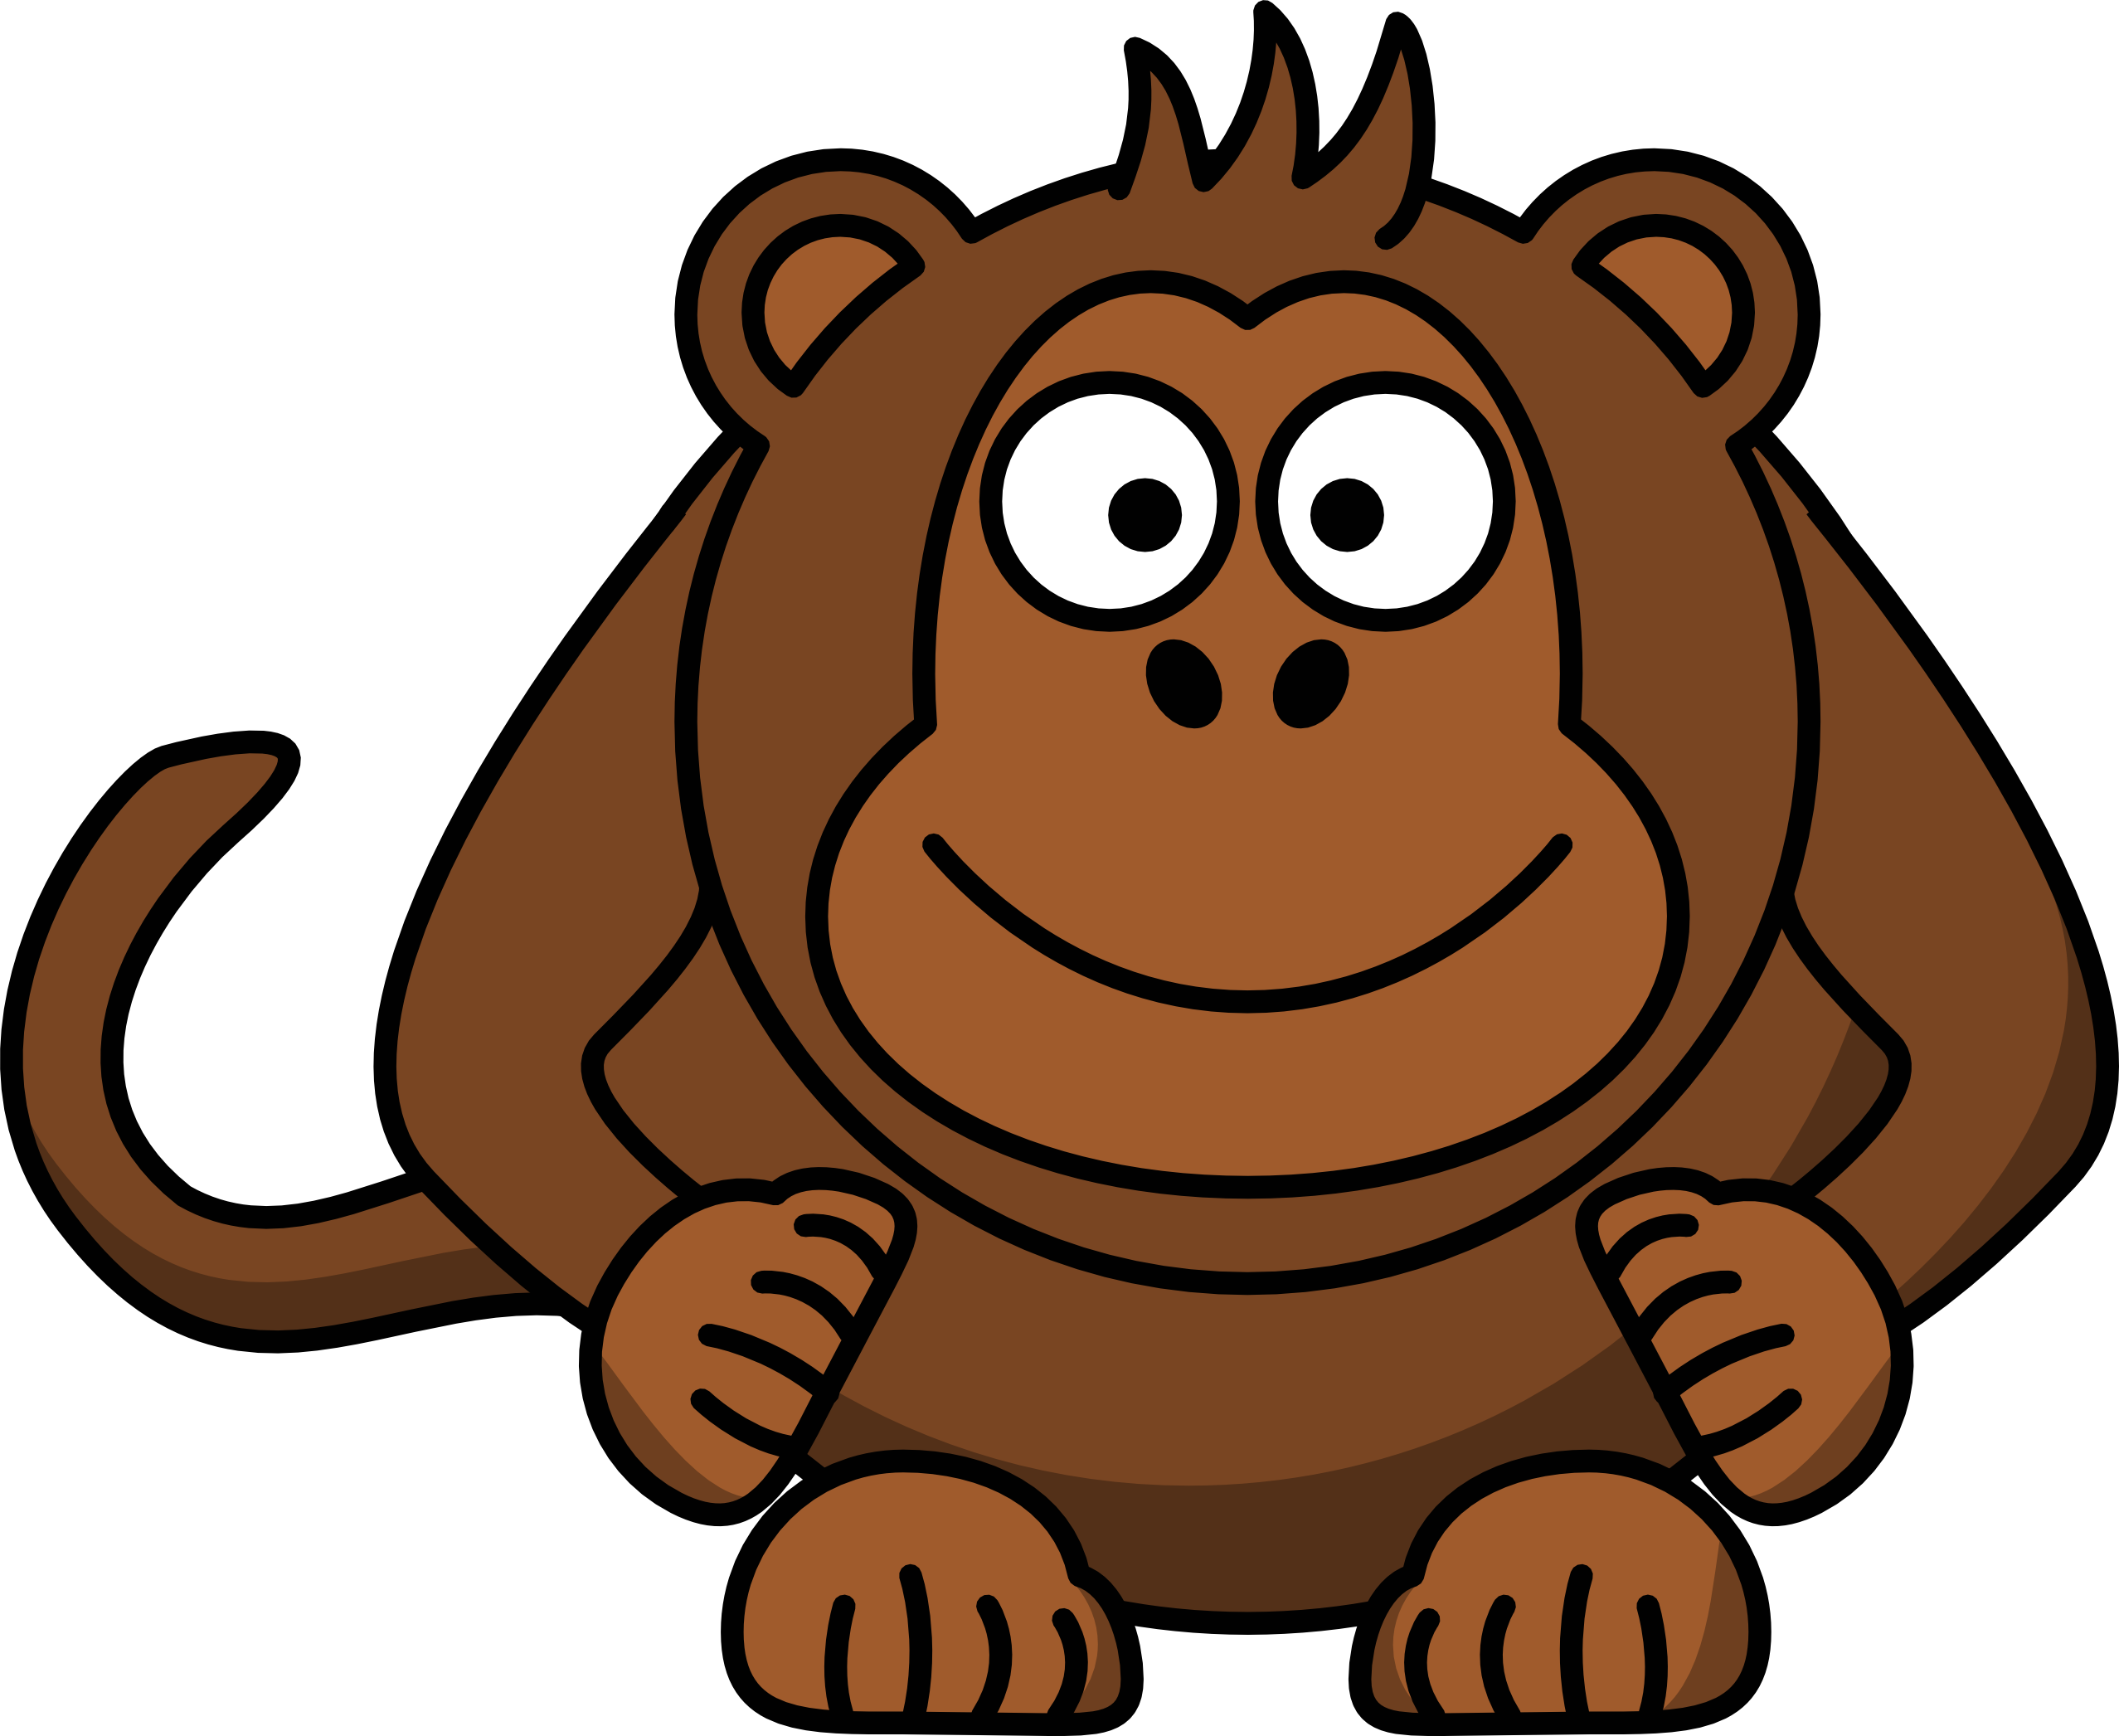 Cartoon Monkey Drawings - Clipart library